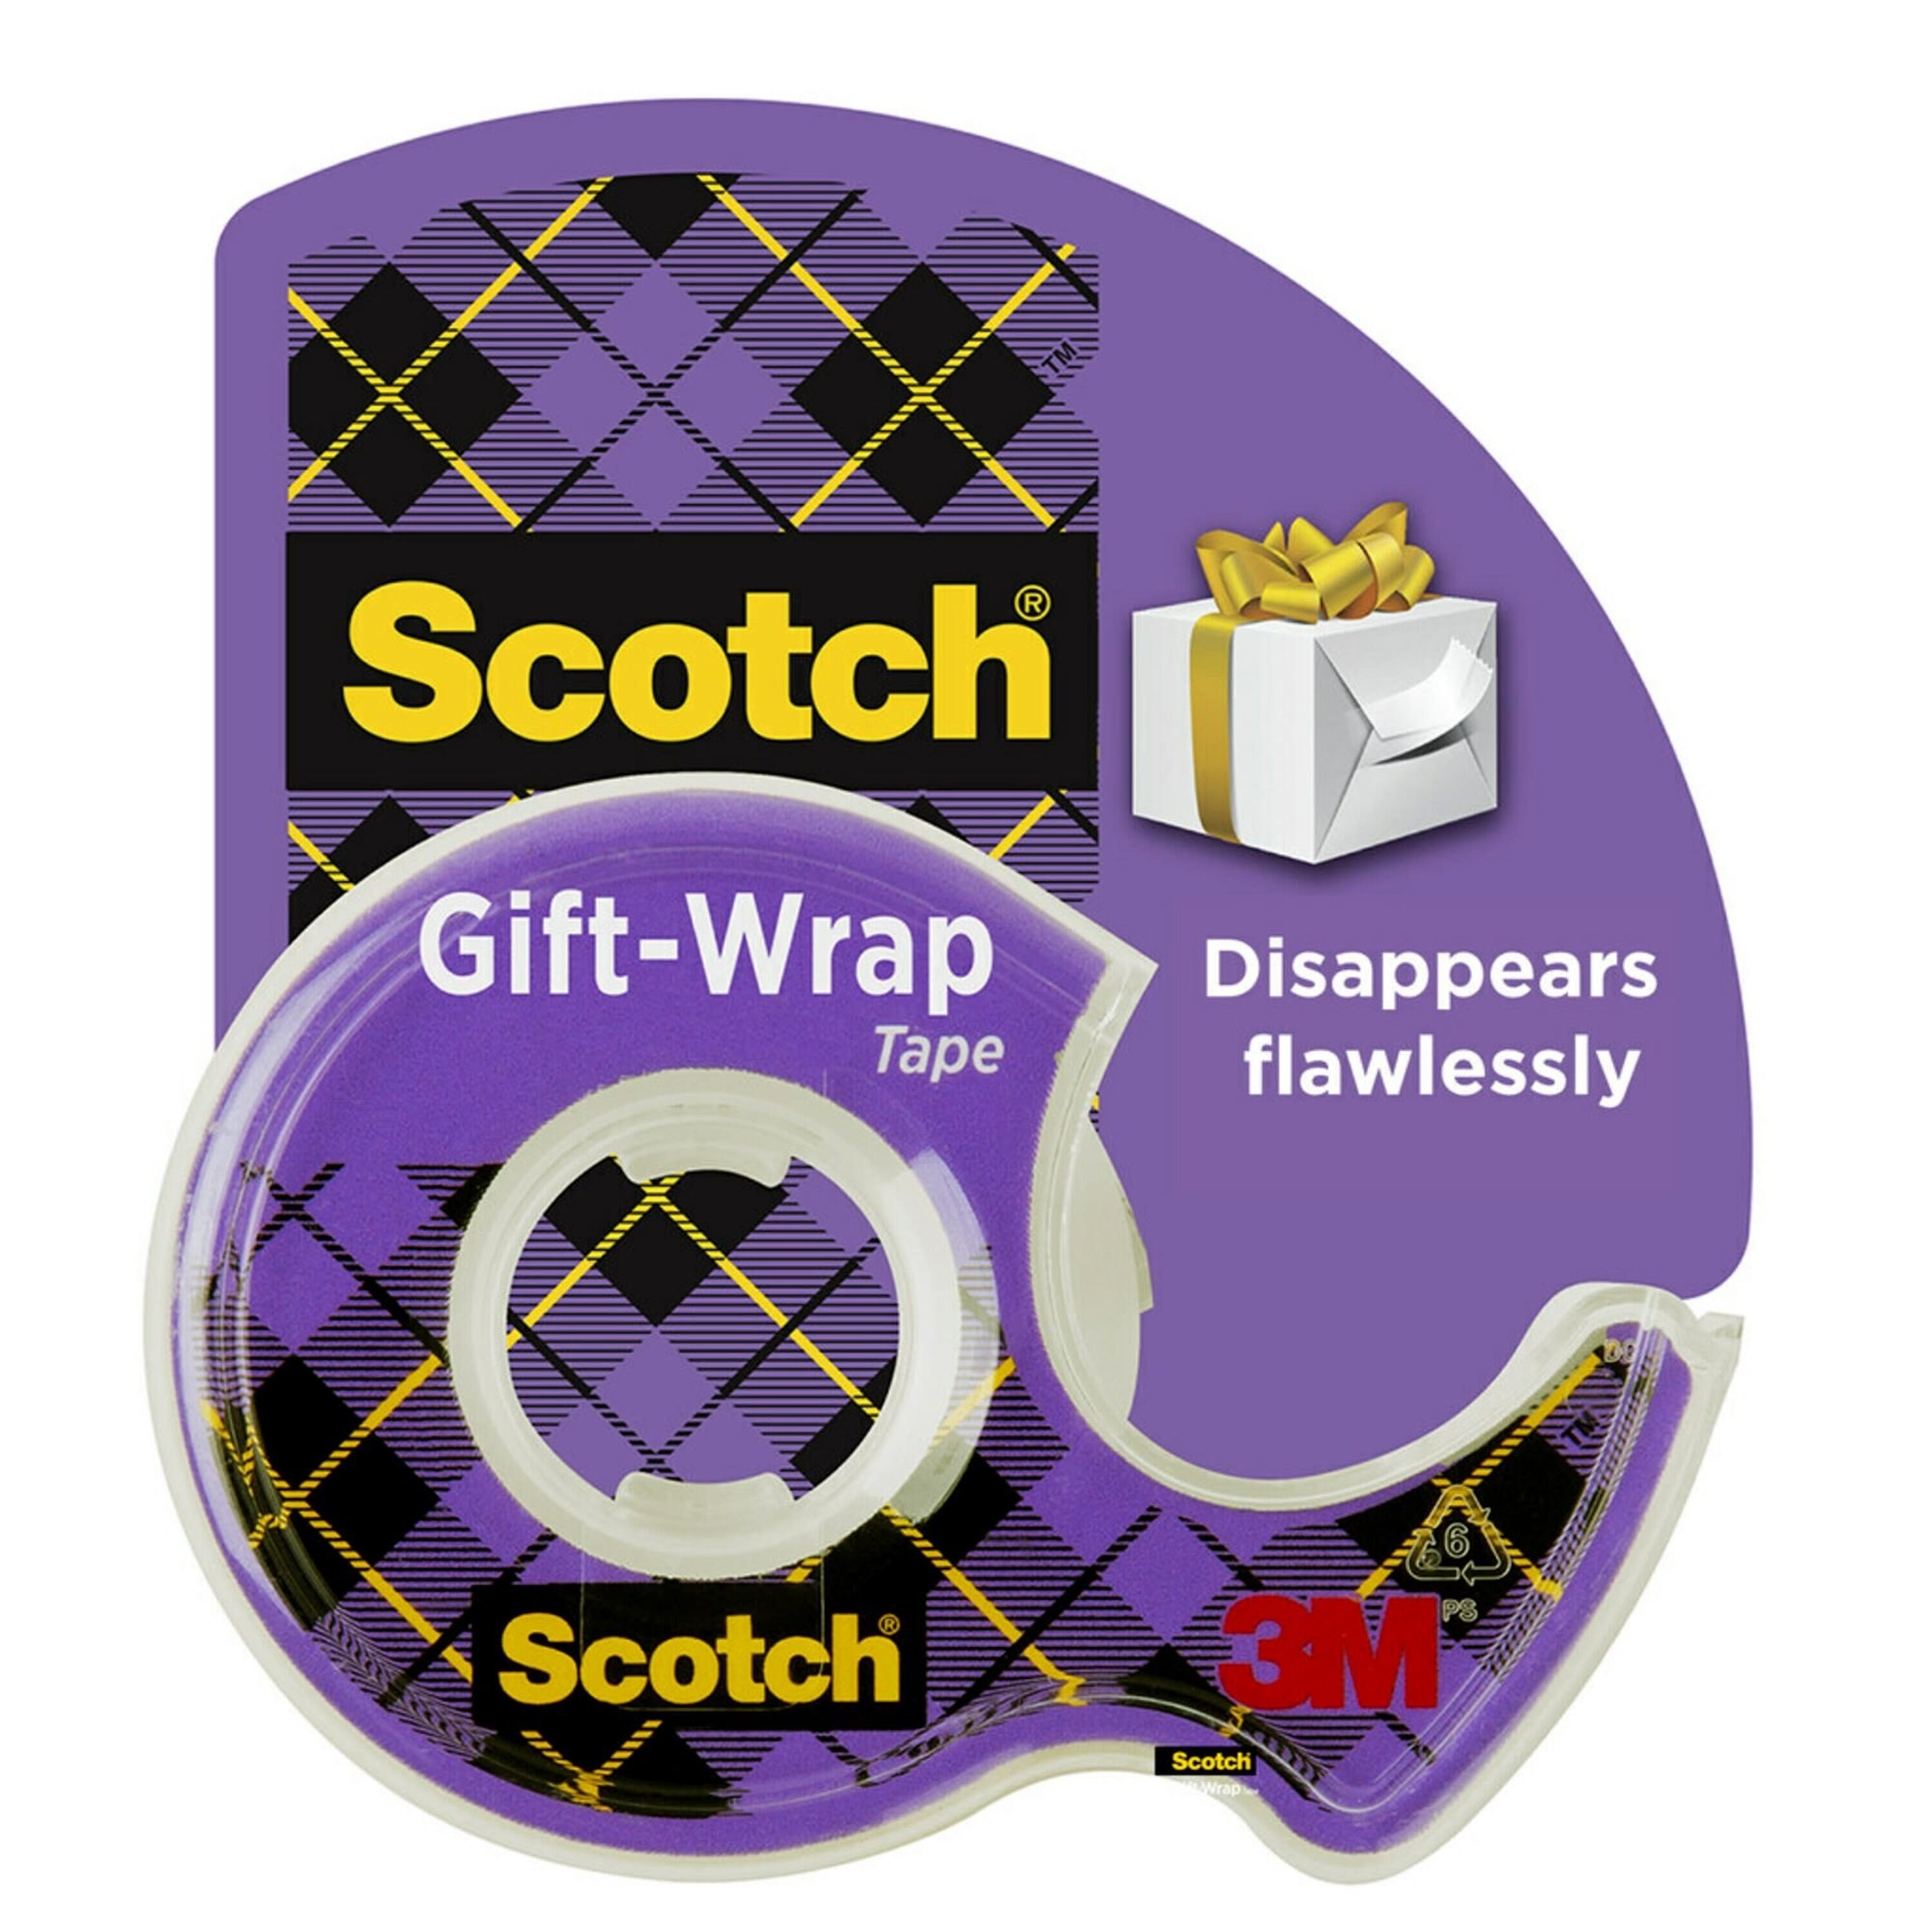 Scotch gift-wrap tape